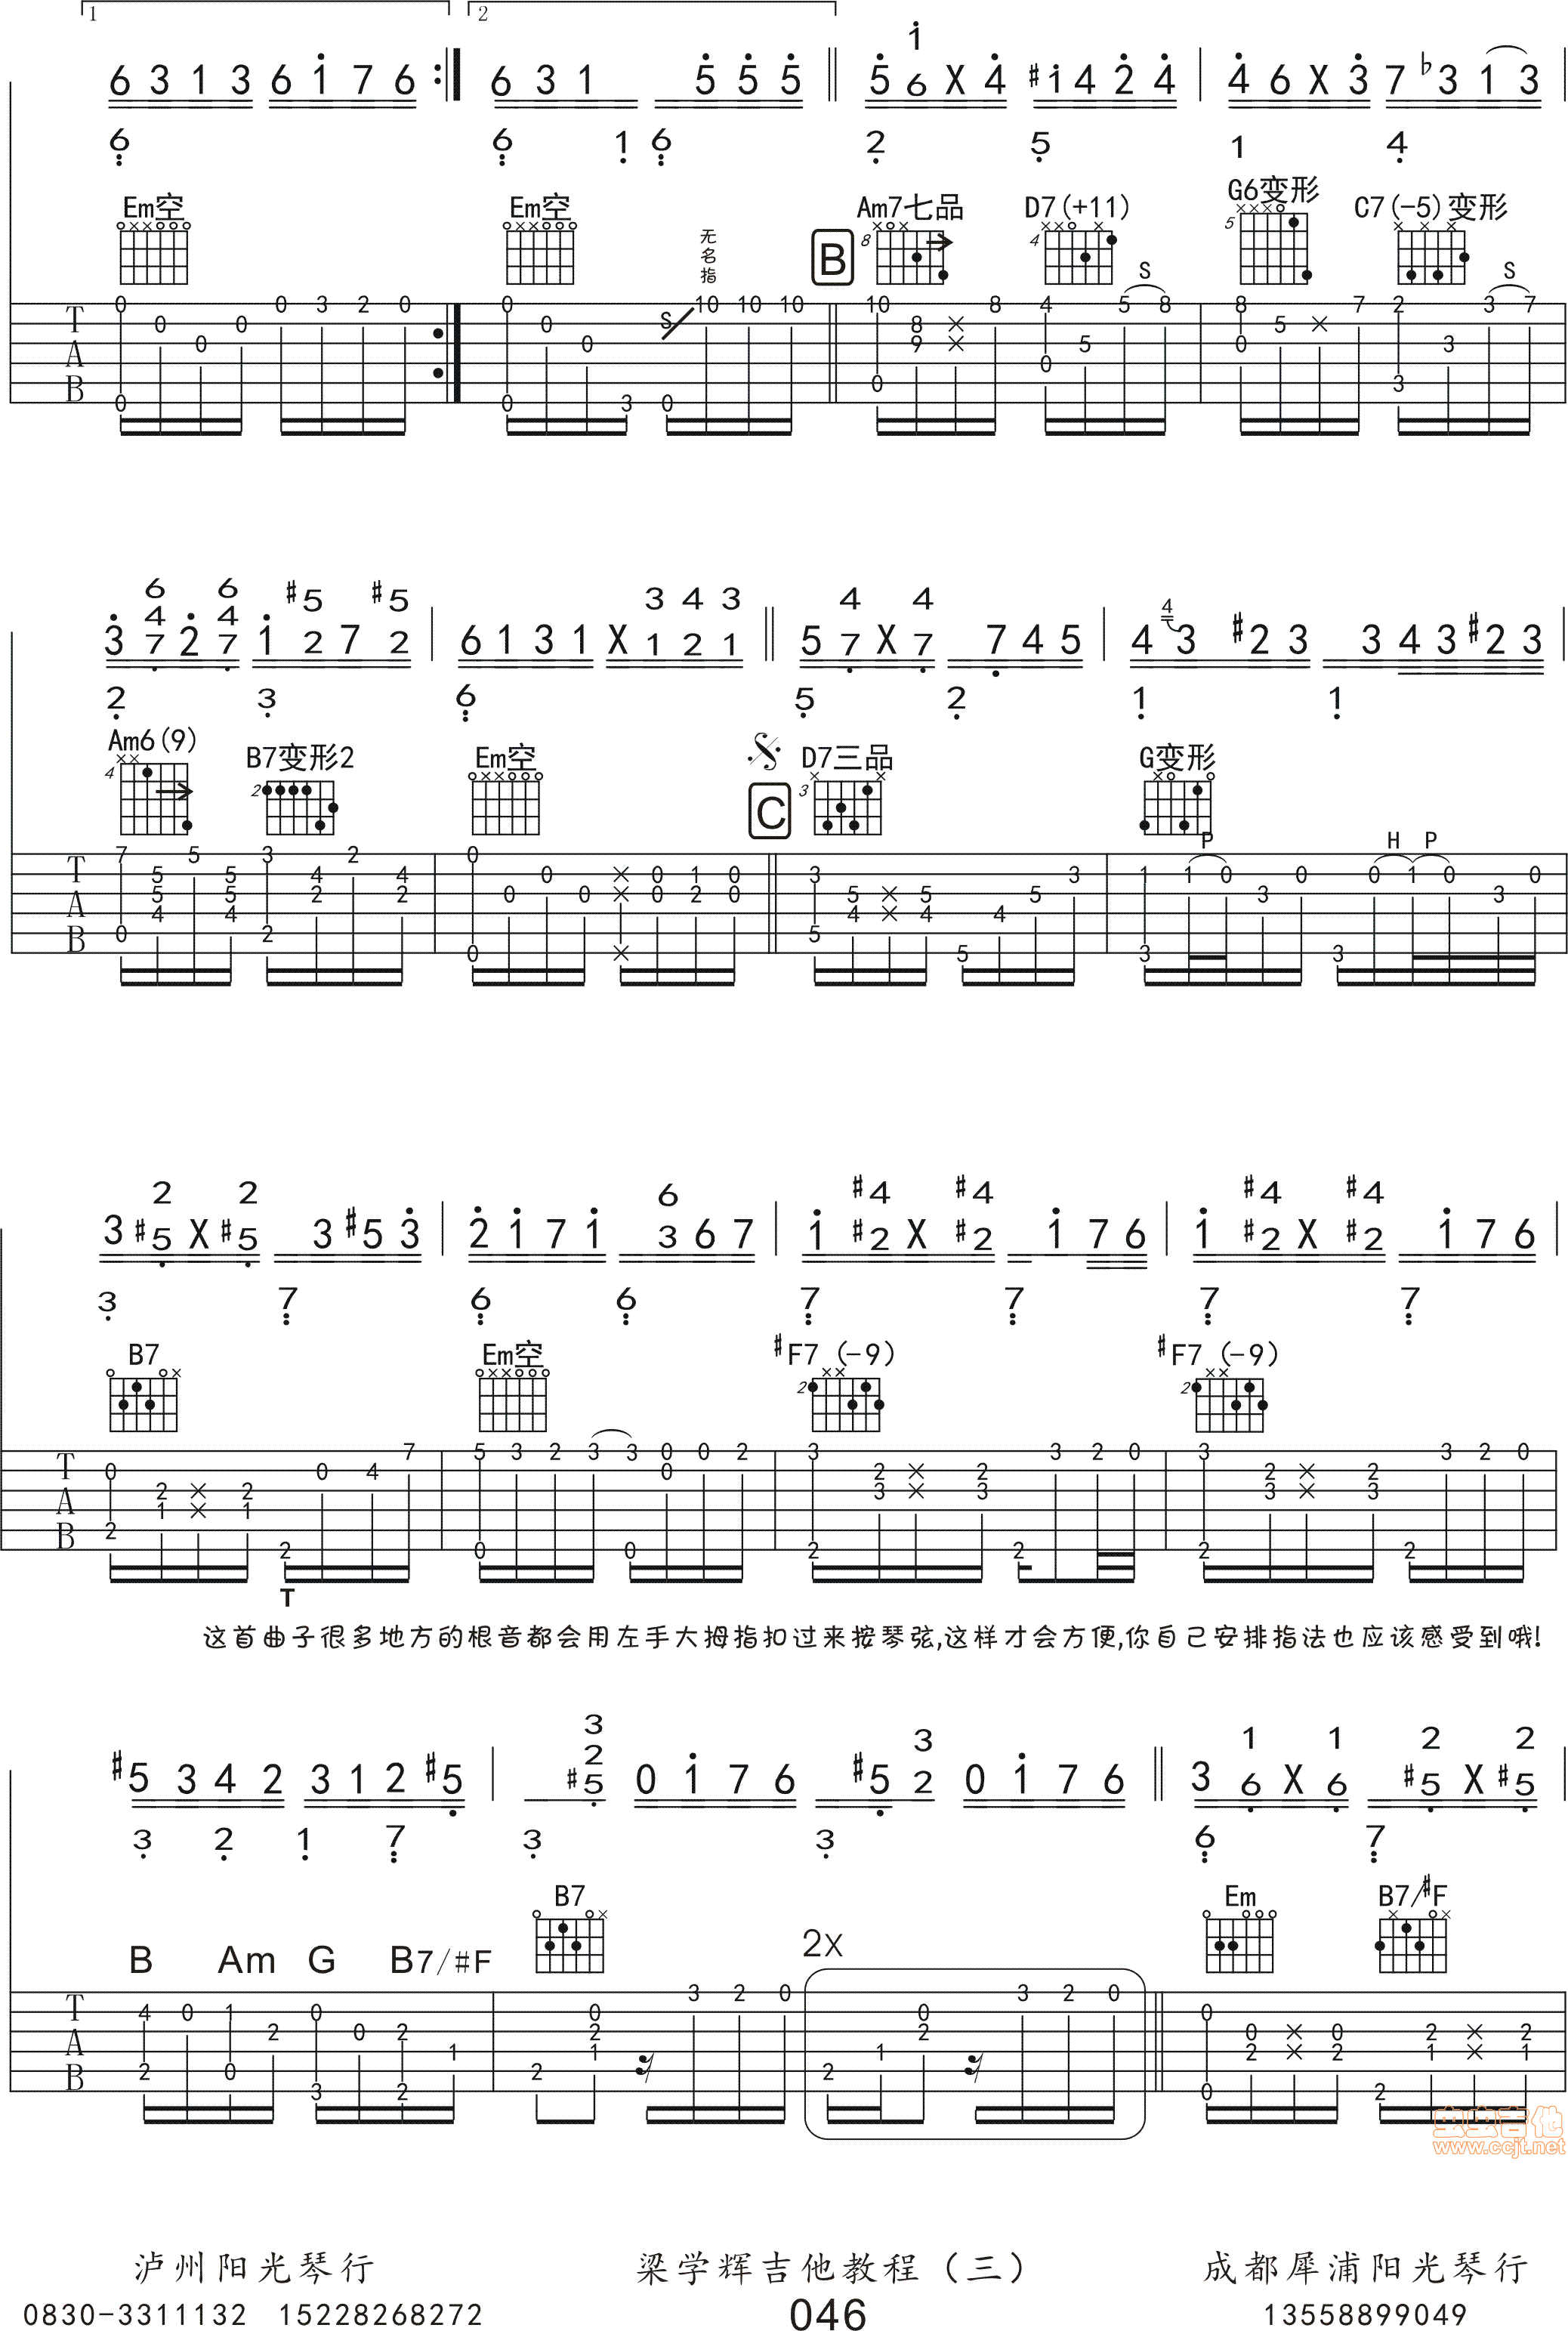 Twilight by Kotaro Oshio SOLO Guitar Tabs Chords Notes Sheet Music Free